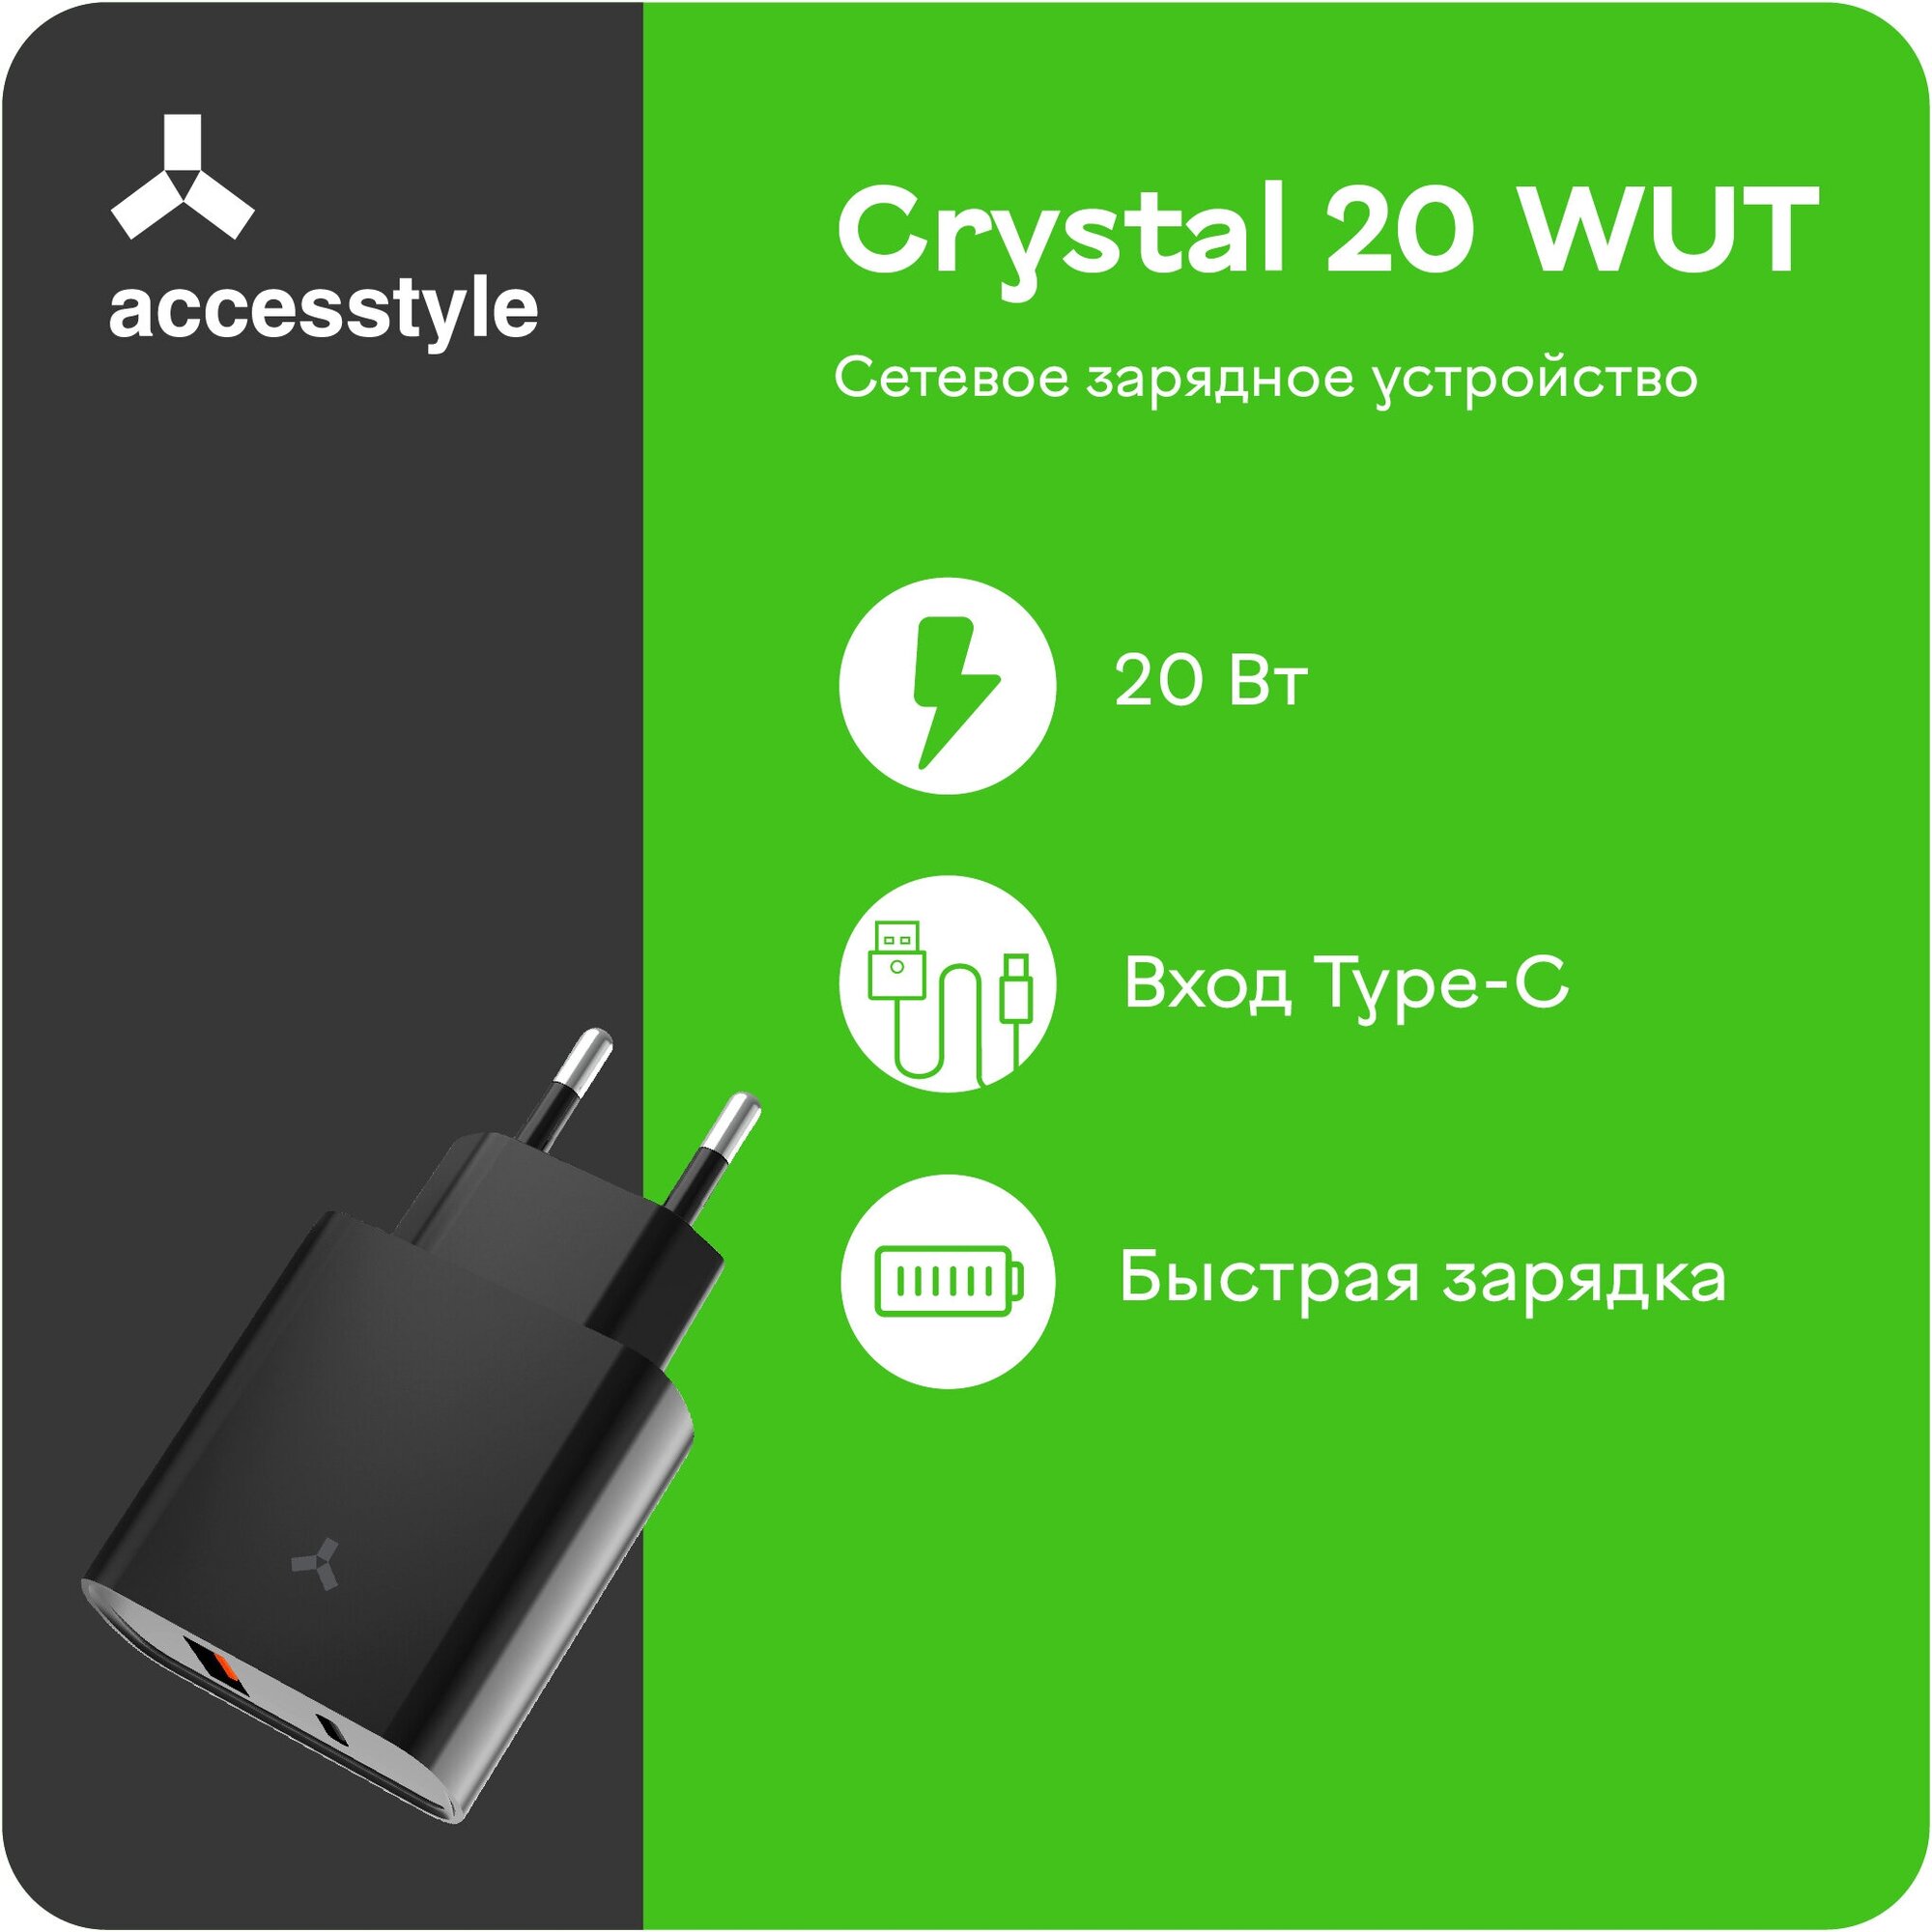 Сетевое зарядное устройство Accesstyle Crystal 20WUT белое/apple/iPhone/iPad/USB